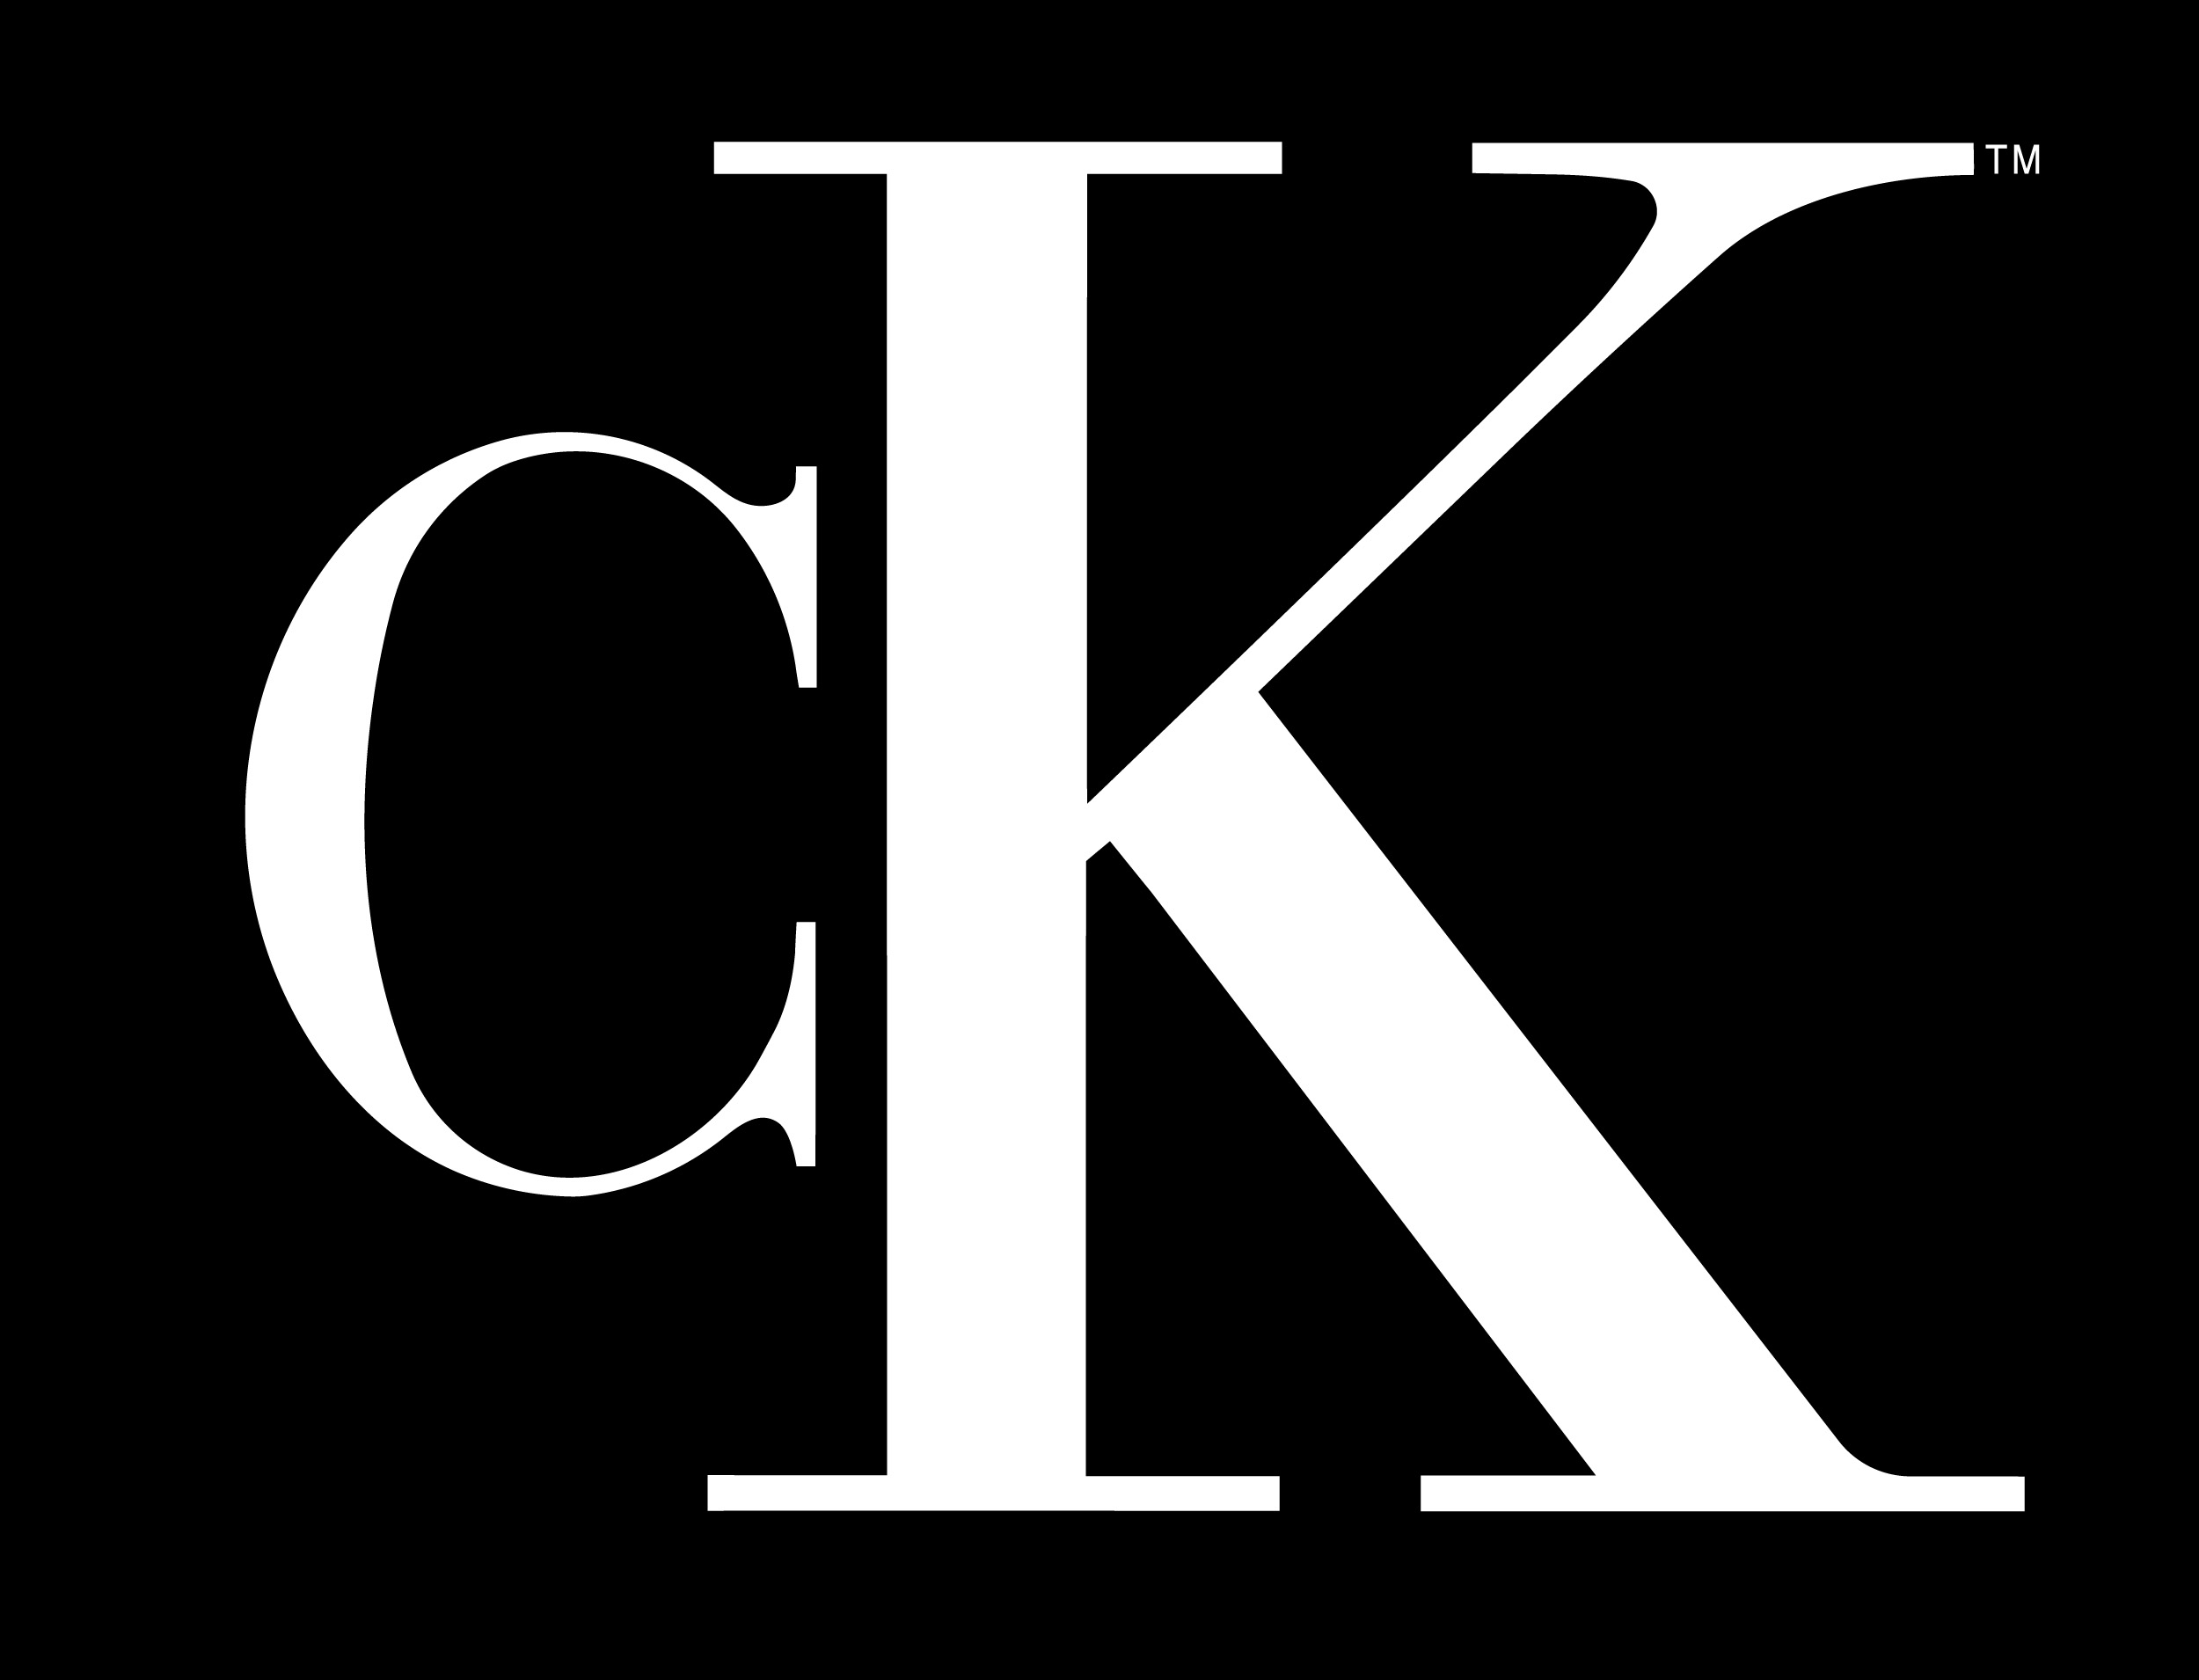 ck brand logo